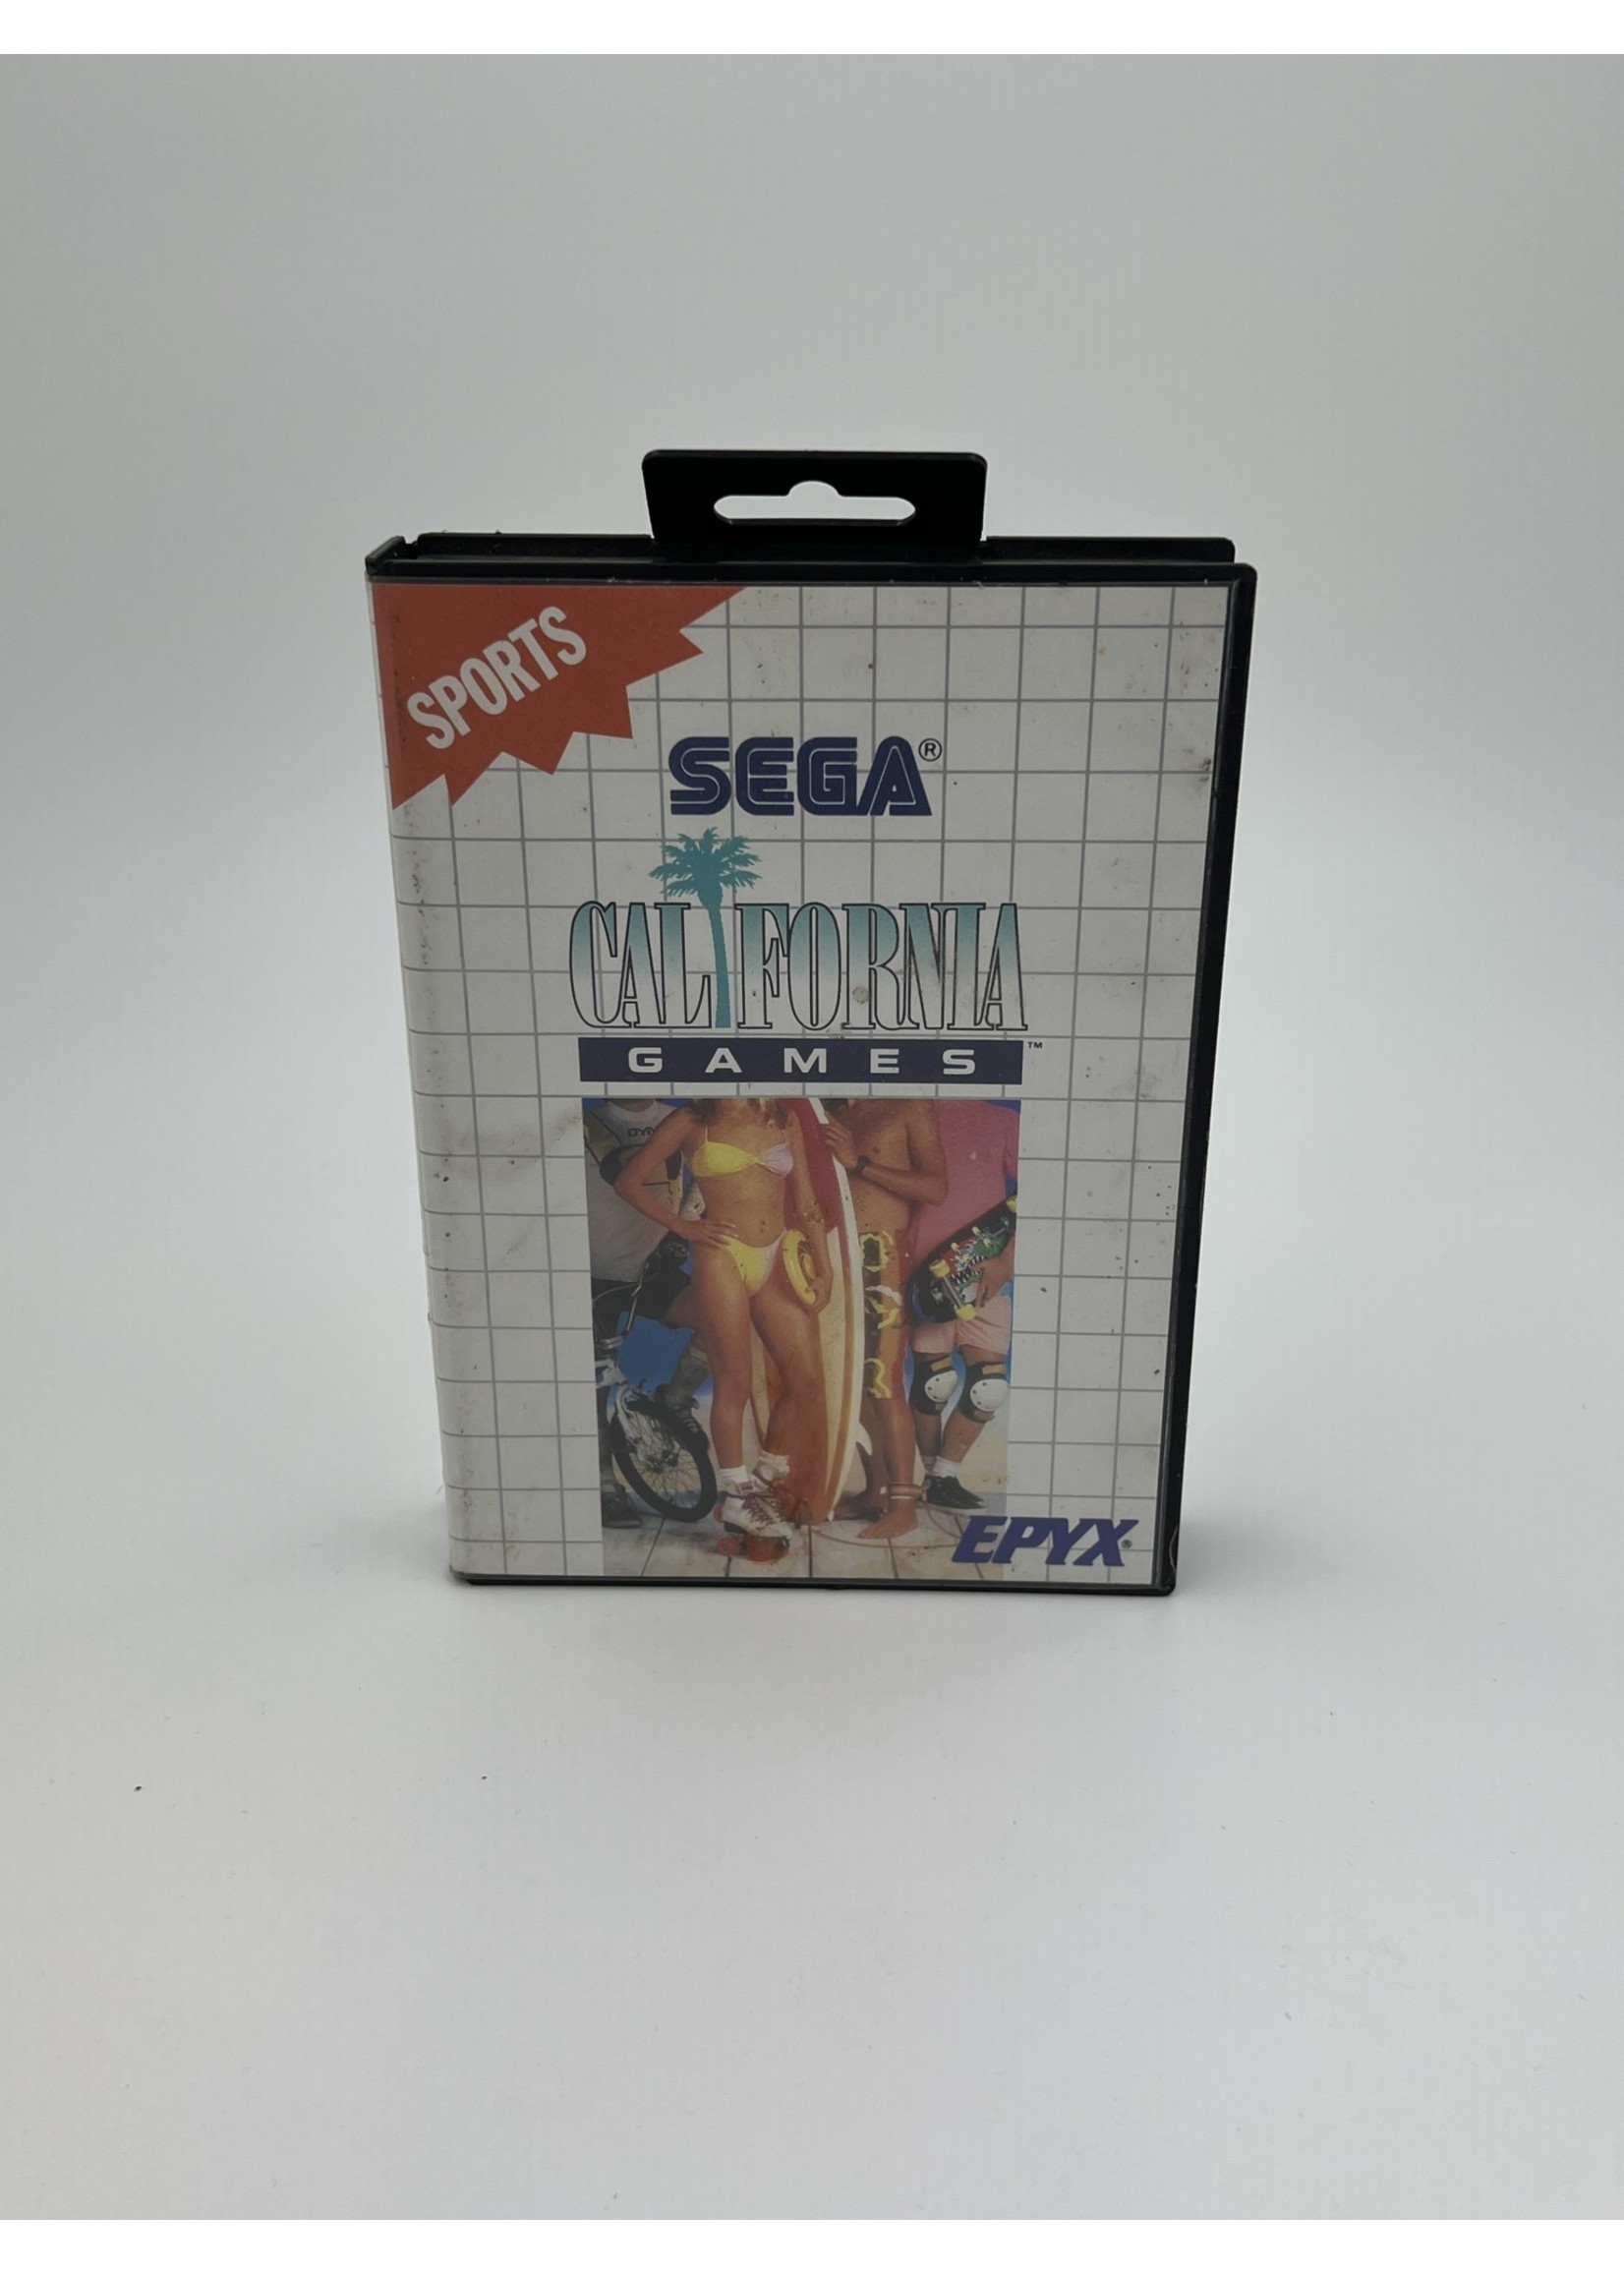 Sega Master System California Games Sega Master System